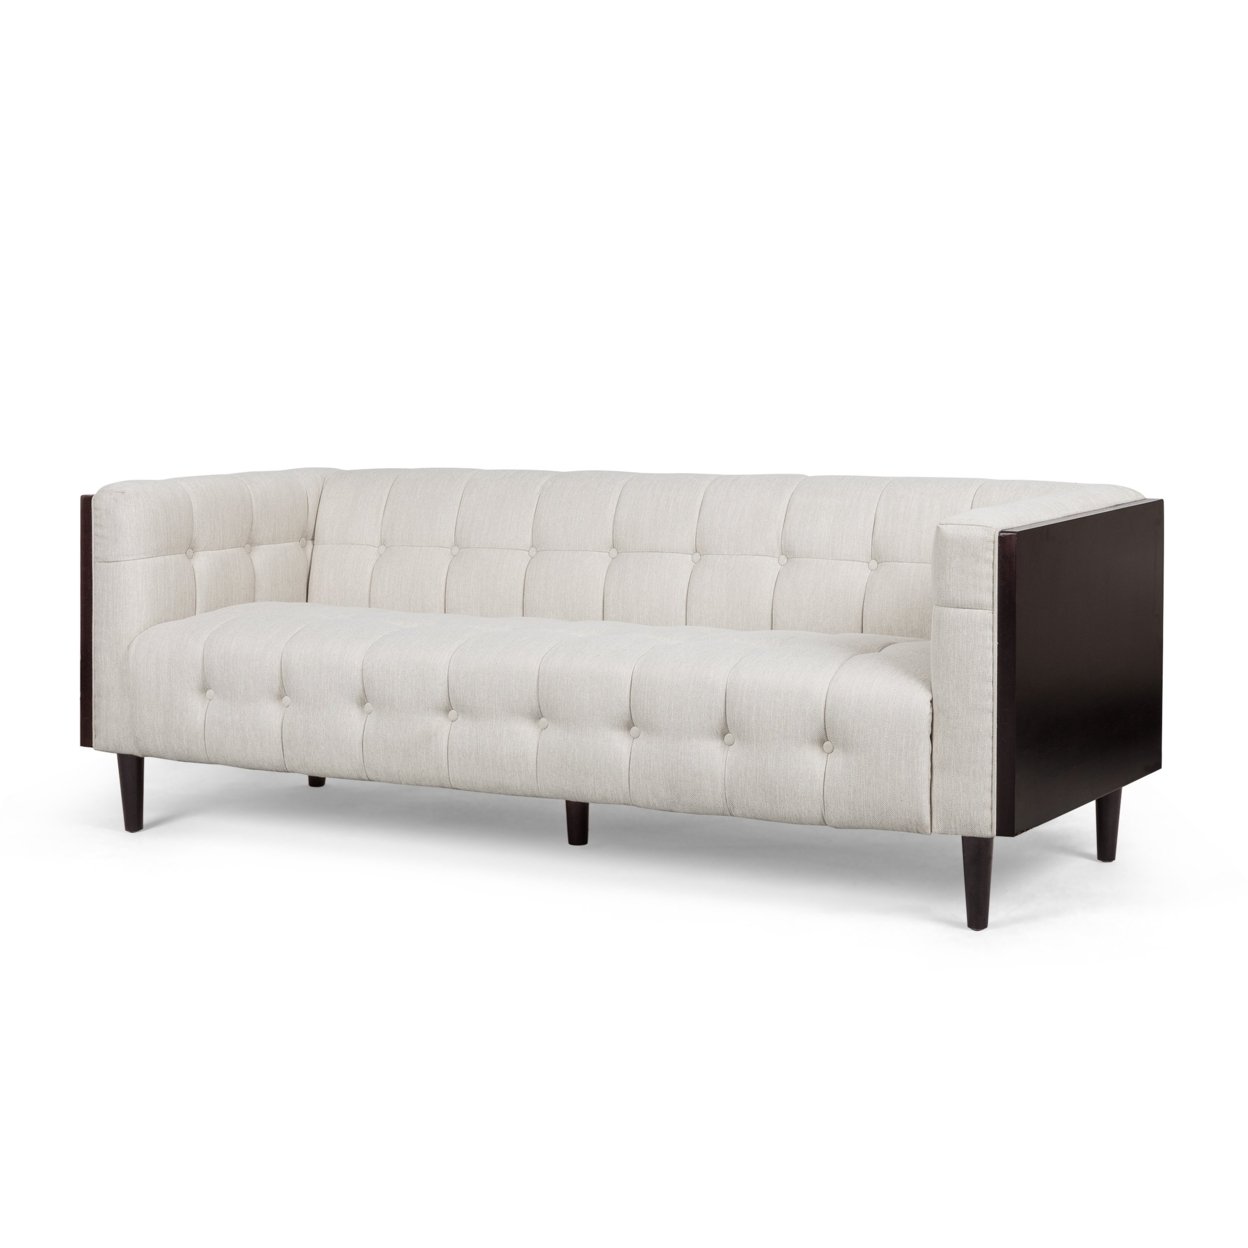 Croton Contemporary Tufted 3 Seater Sofa - Charcoal